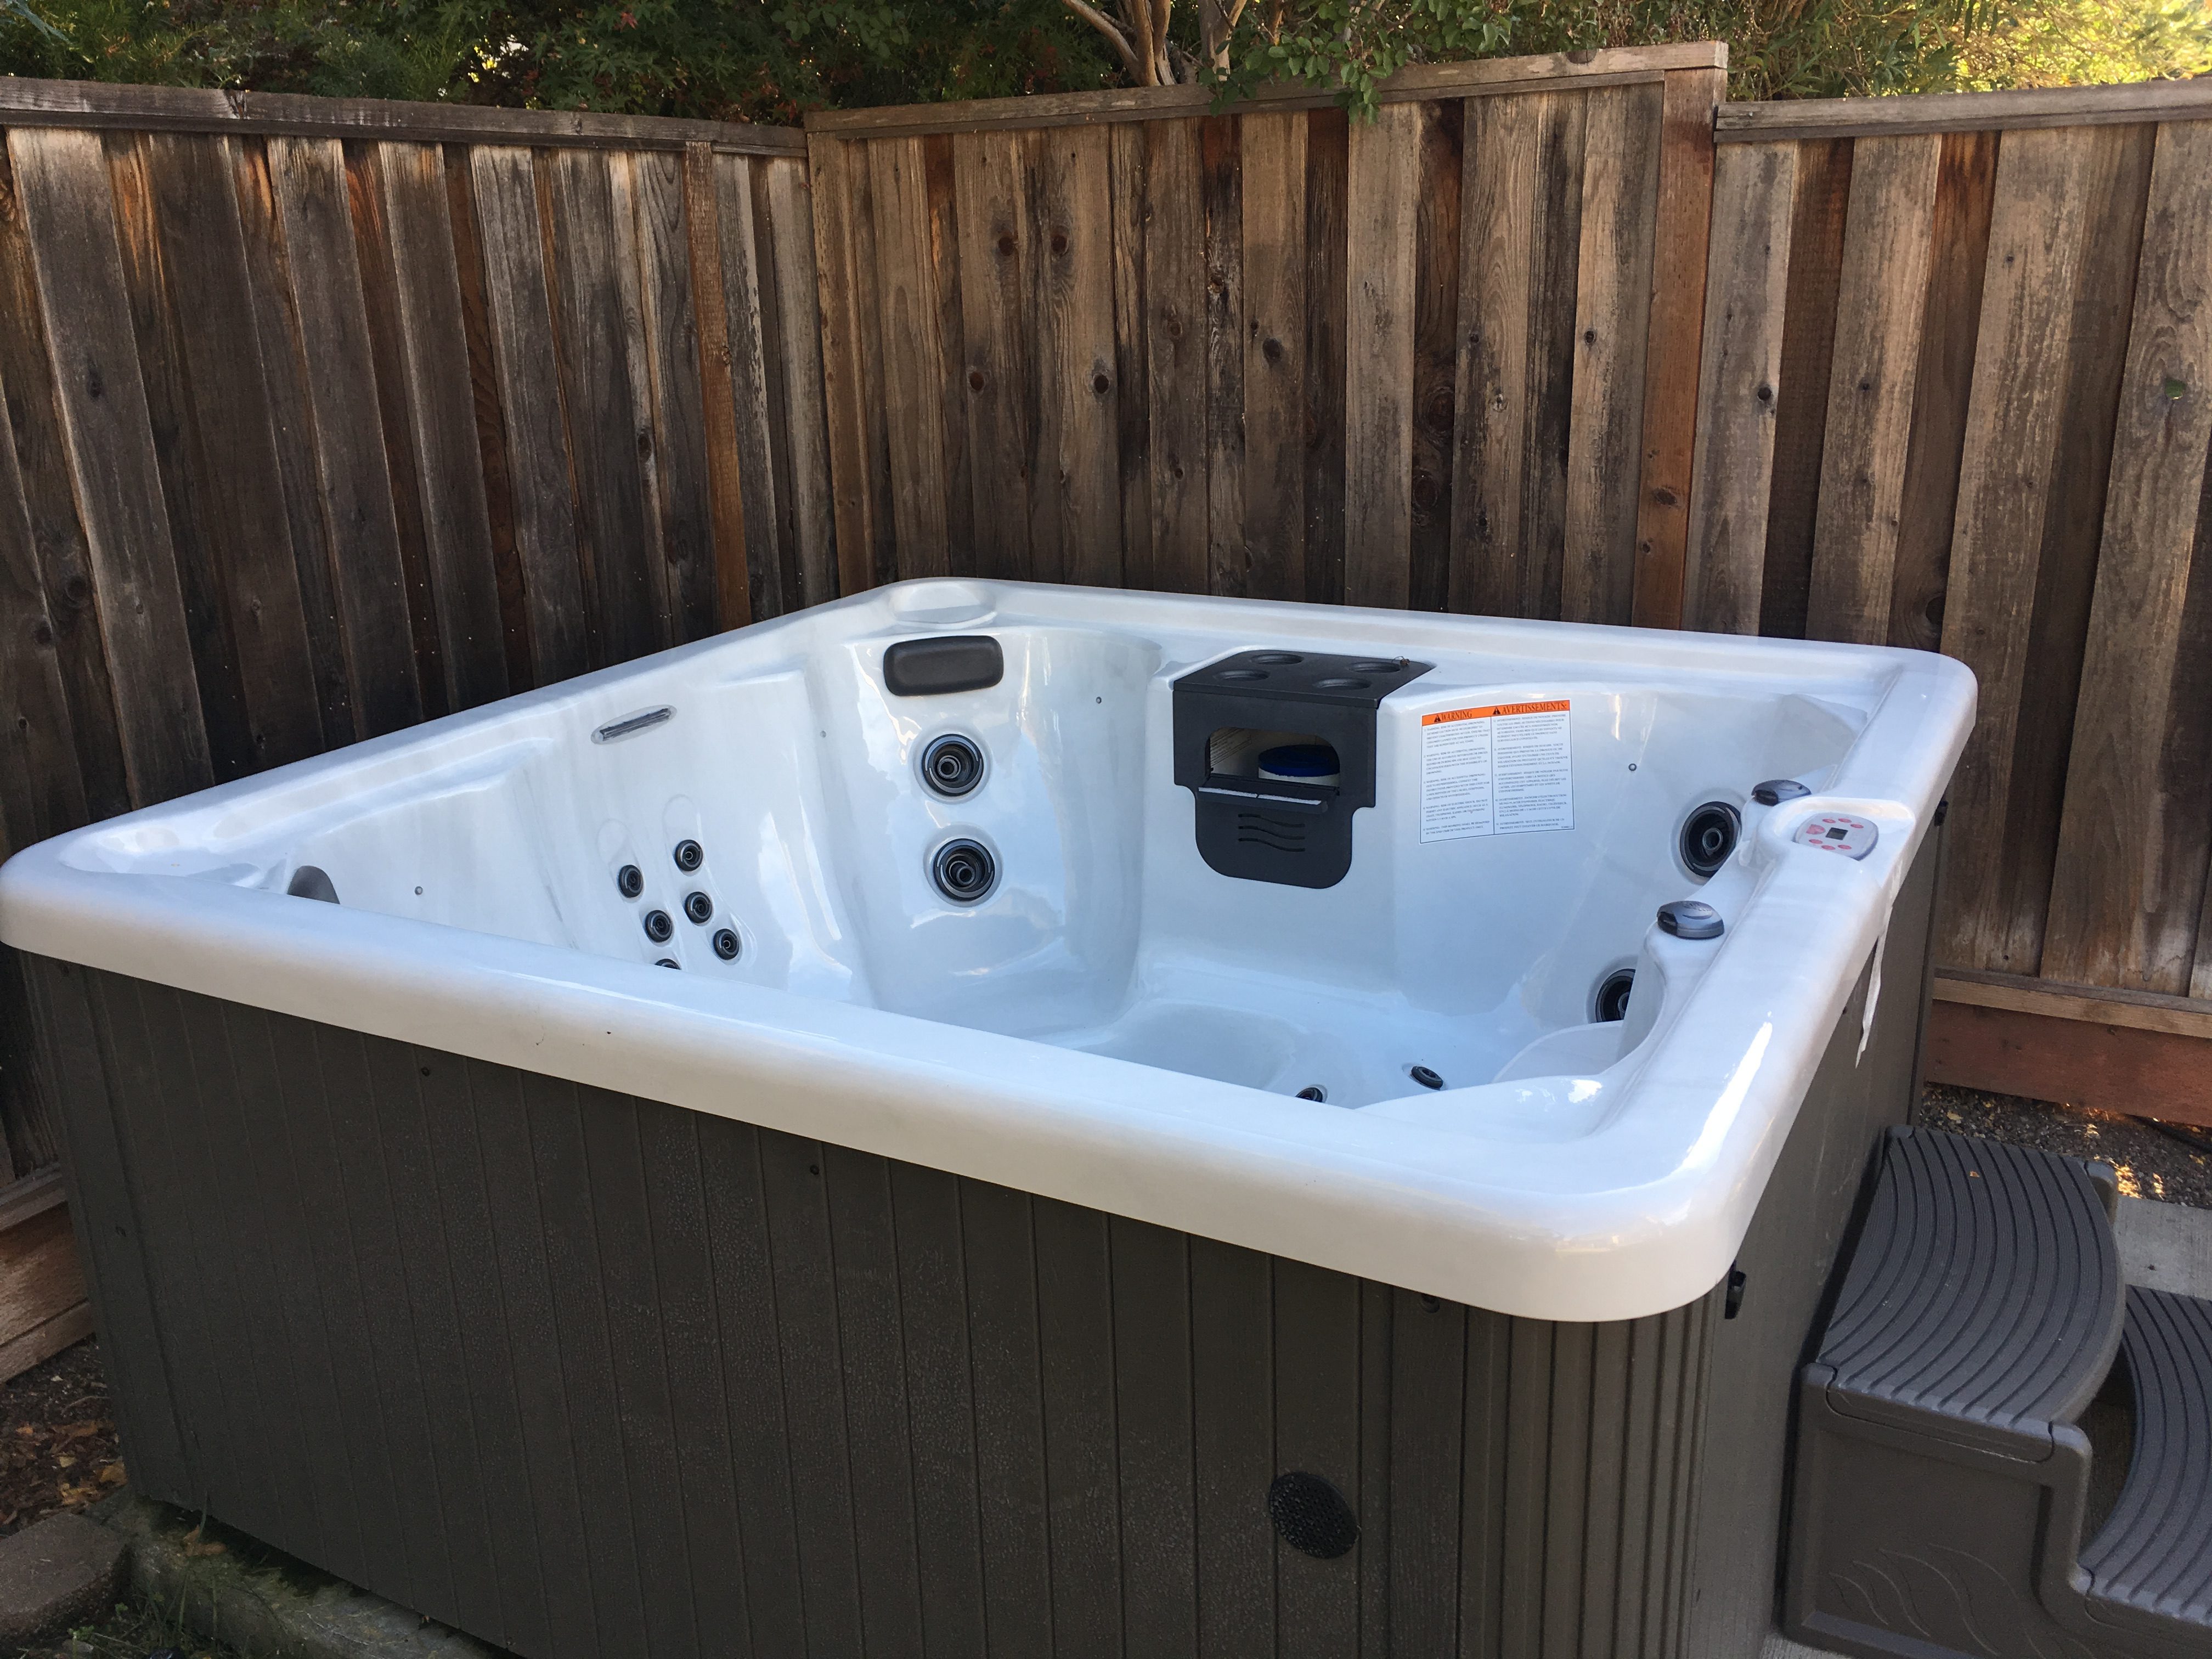 2018 Whirlpool Master Spa Hot Tub - $6400 (gilroy) - Hot ...